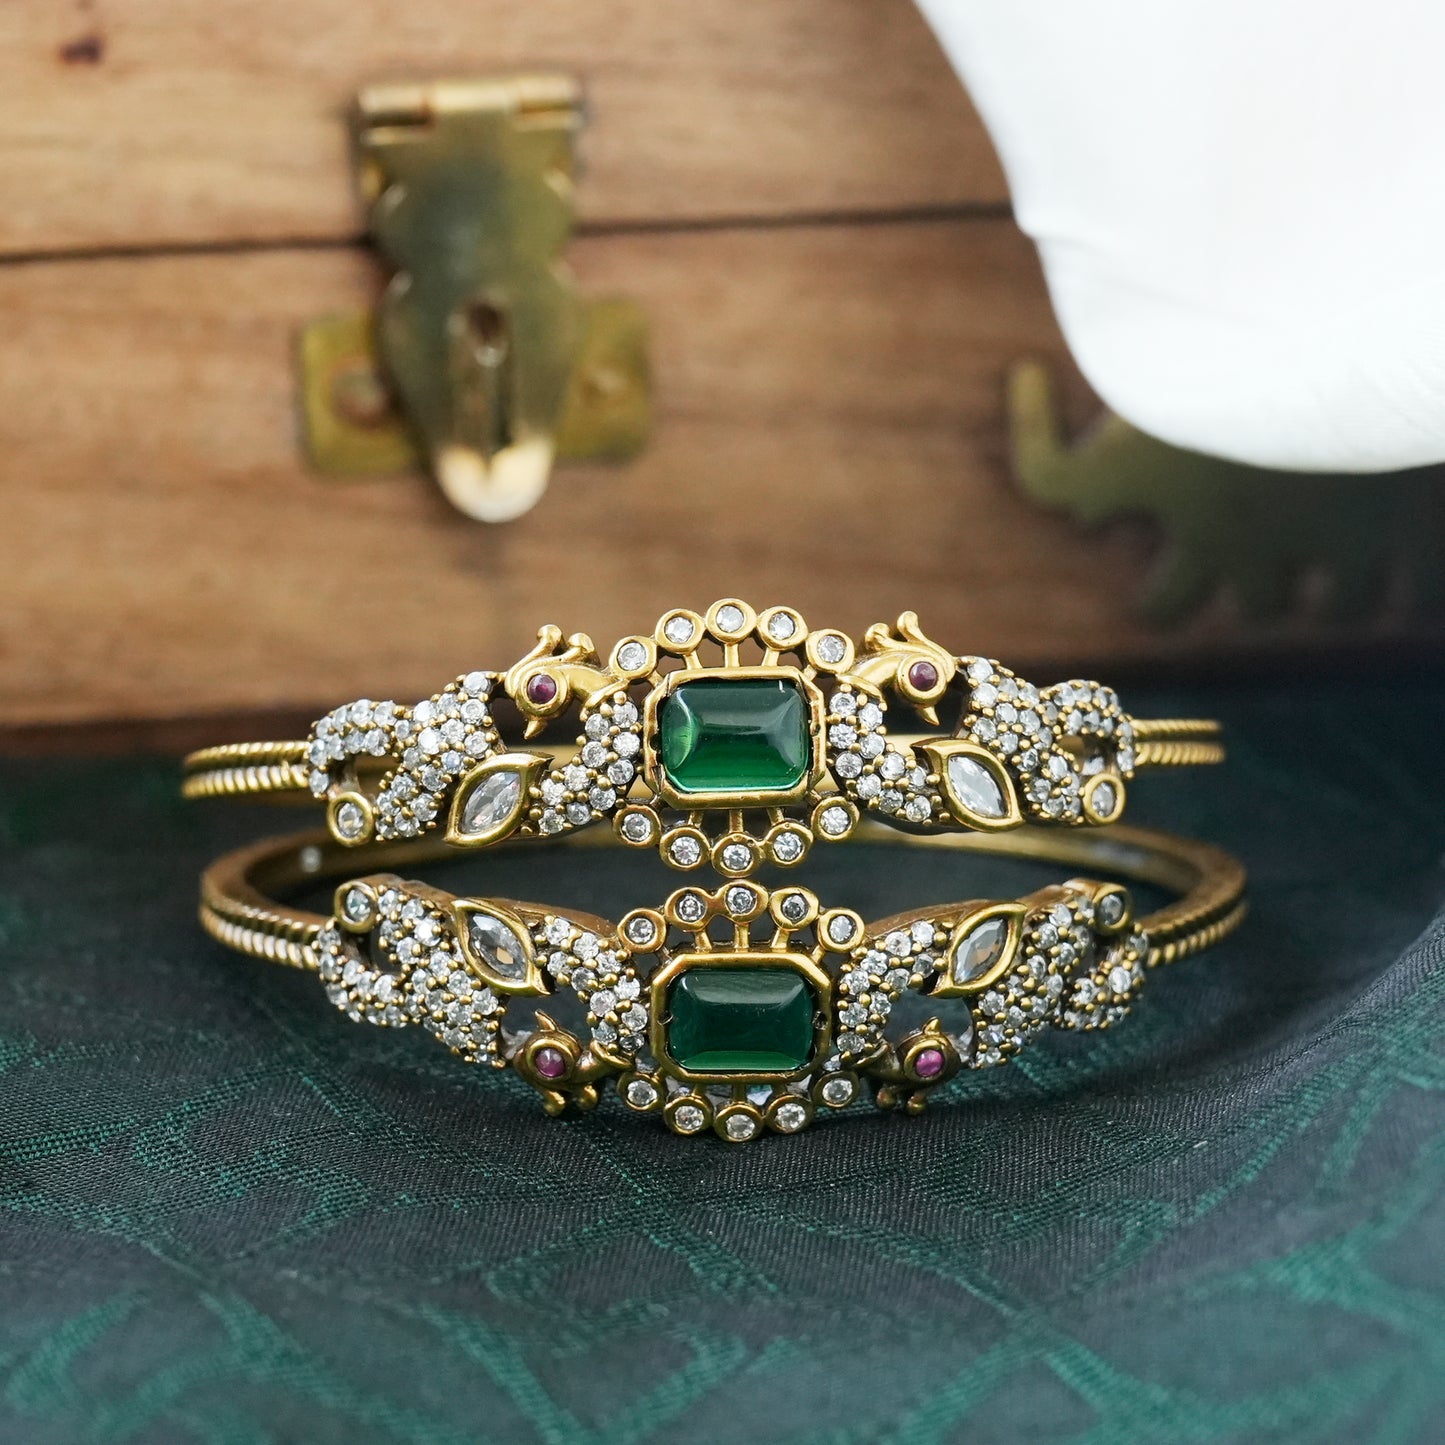 Antique Mehendi Victorian Polish AD Peacock Kada Bangles - Emerald